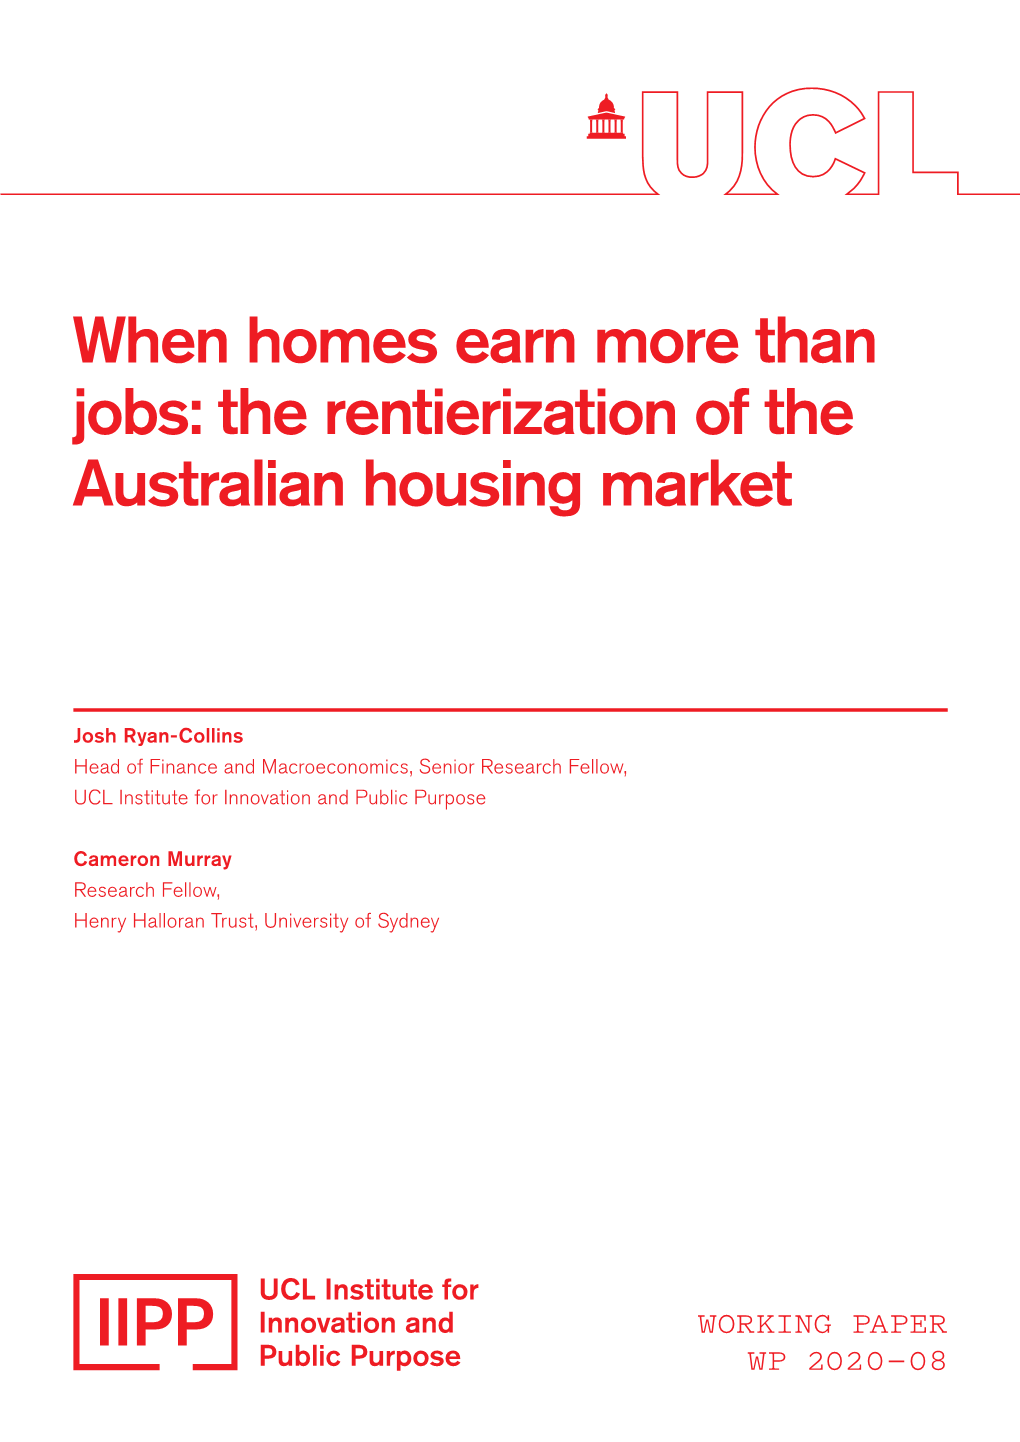 The Rentierization of the Australian Housing Market